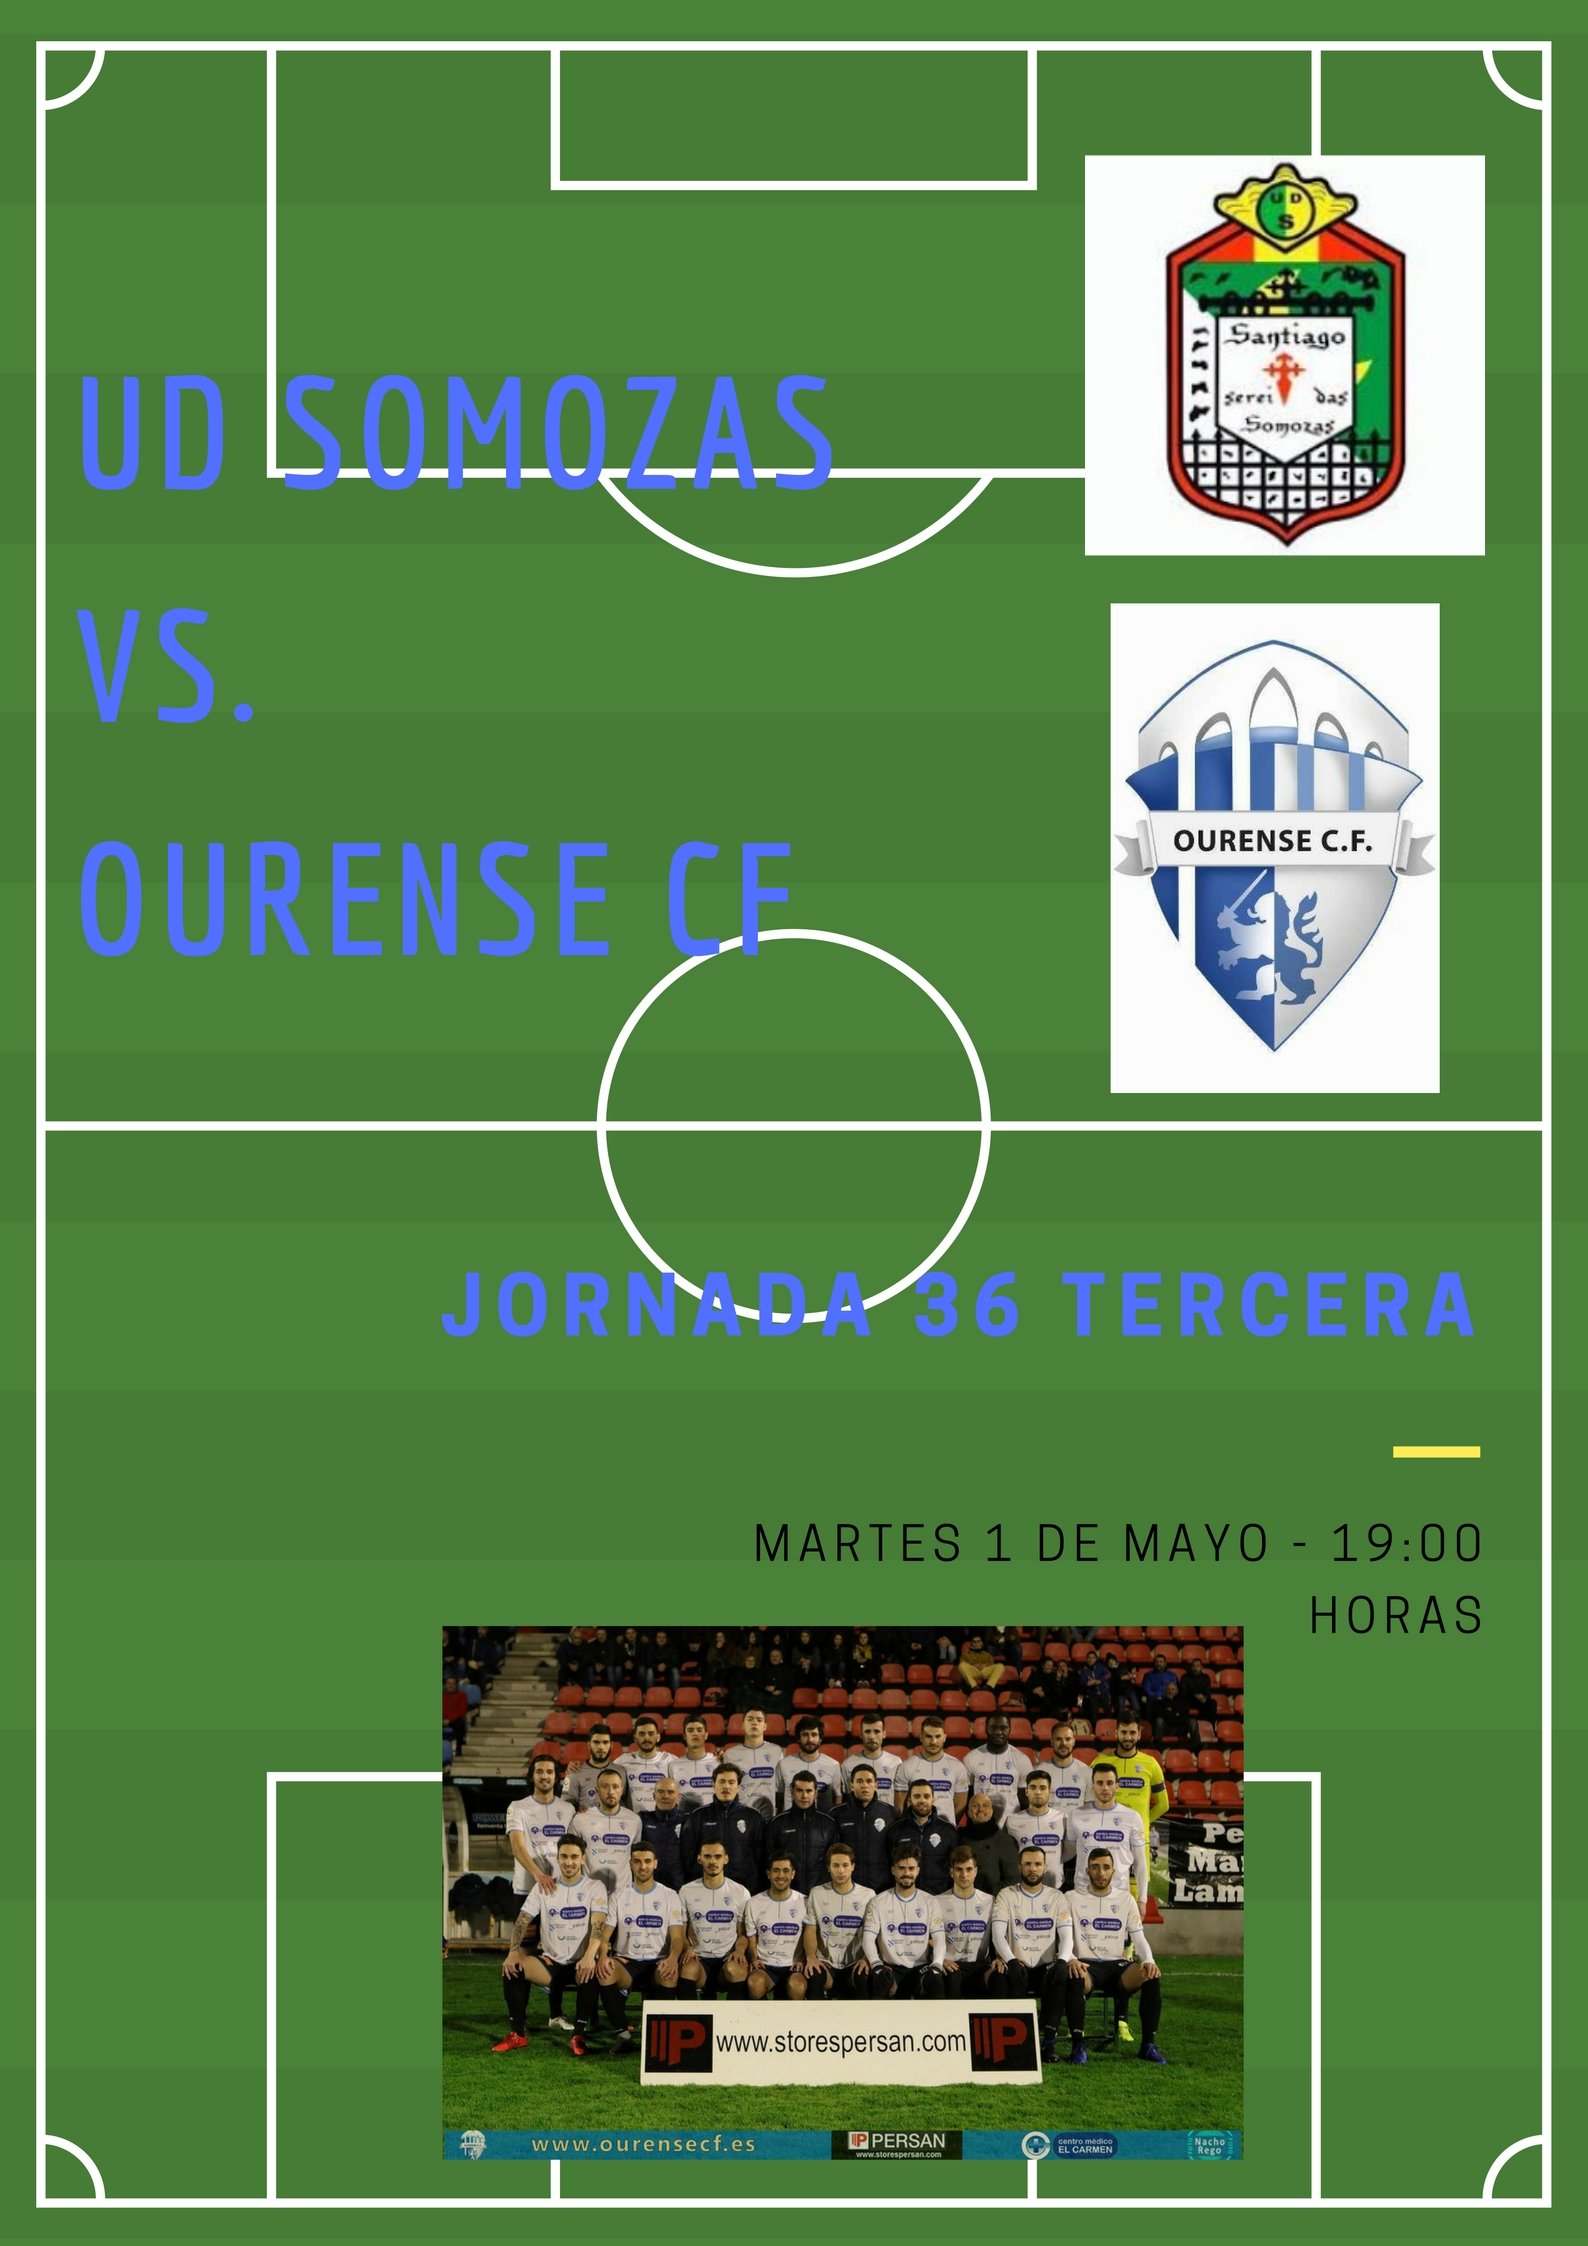 UD Somozas Vs. Ourense CF jornada 36 Tercera Galicia